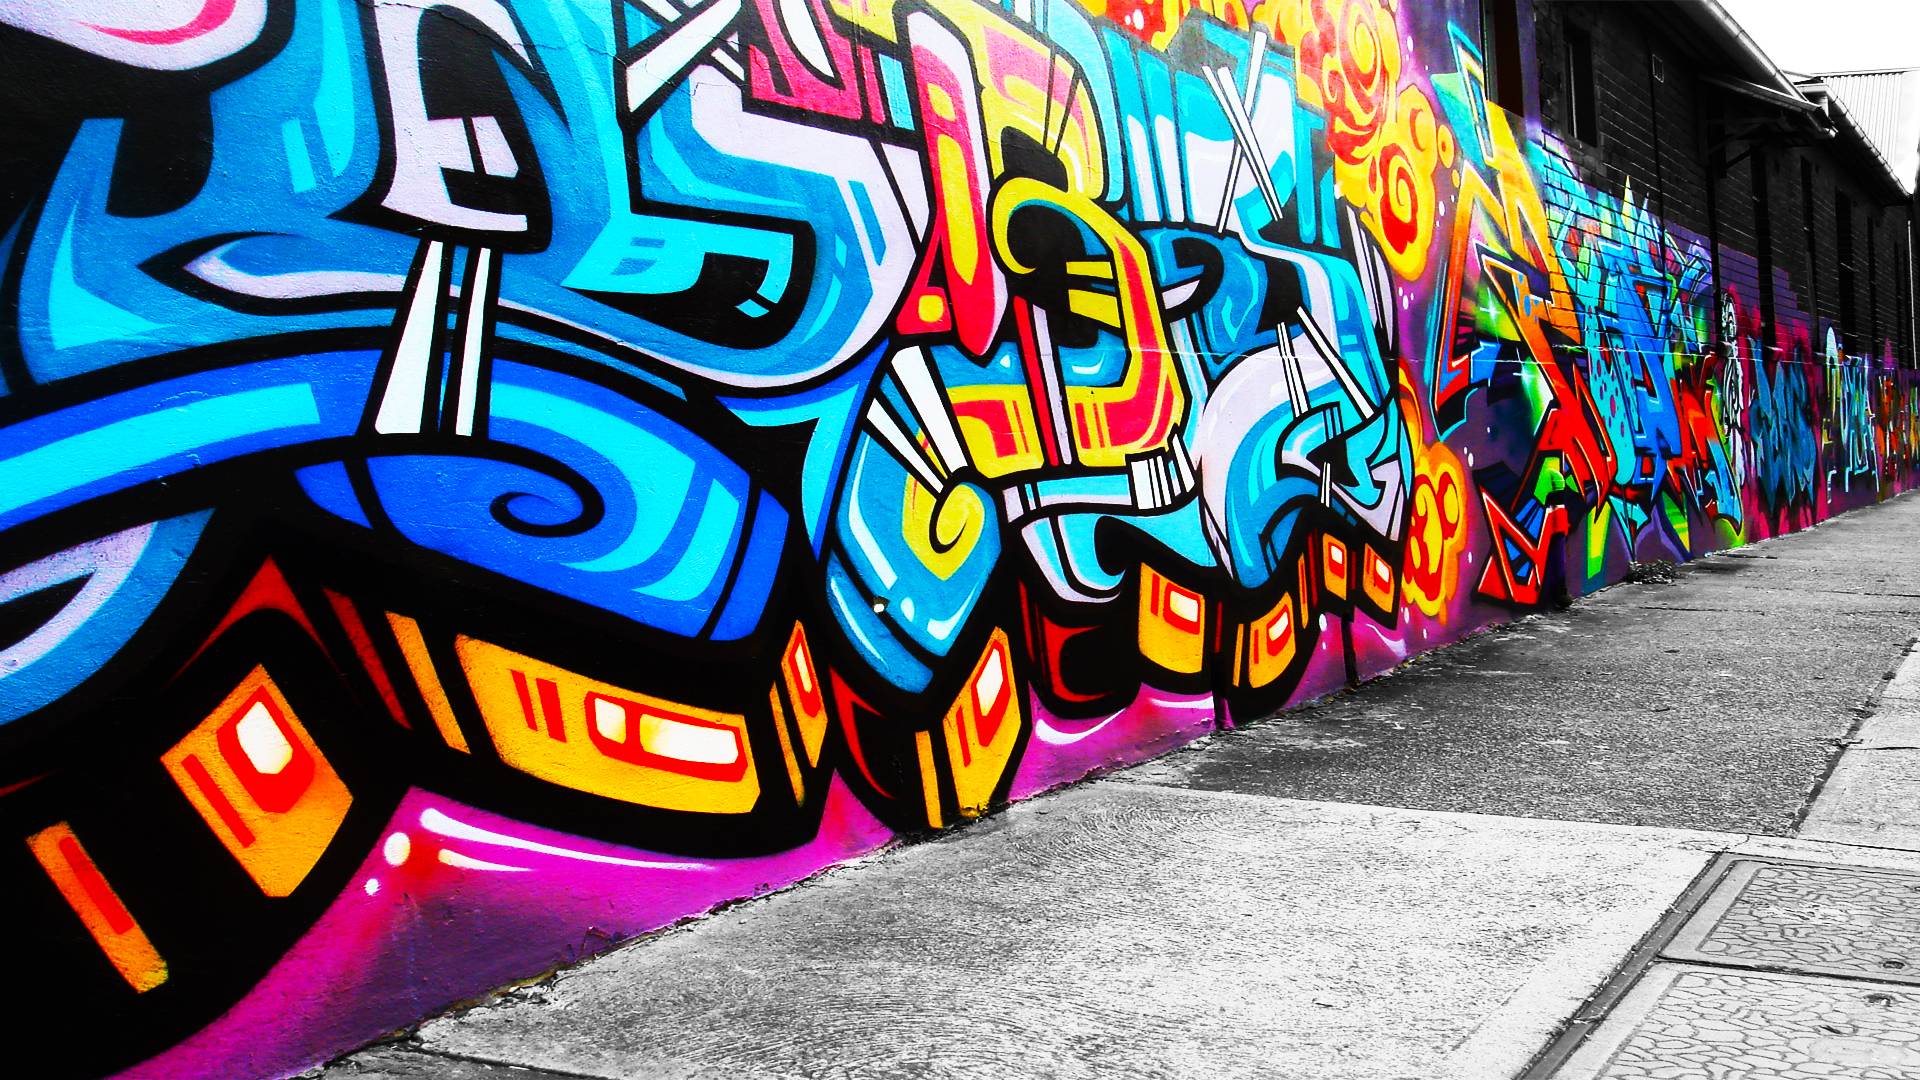 Download Graffiti wallpaper HD free download